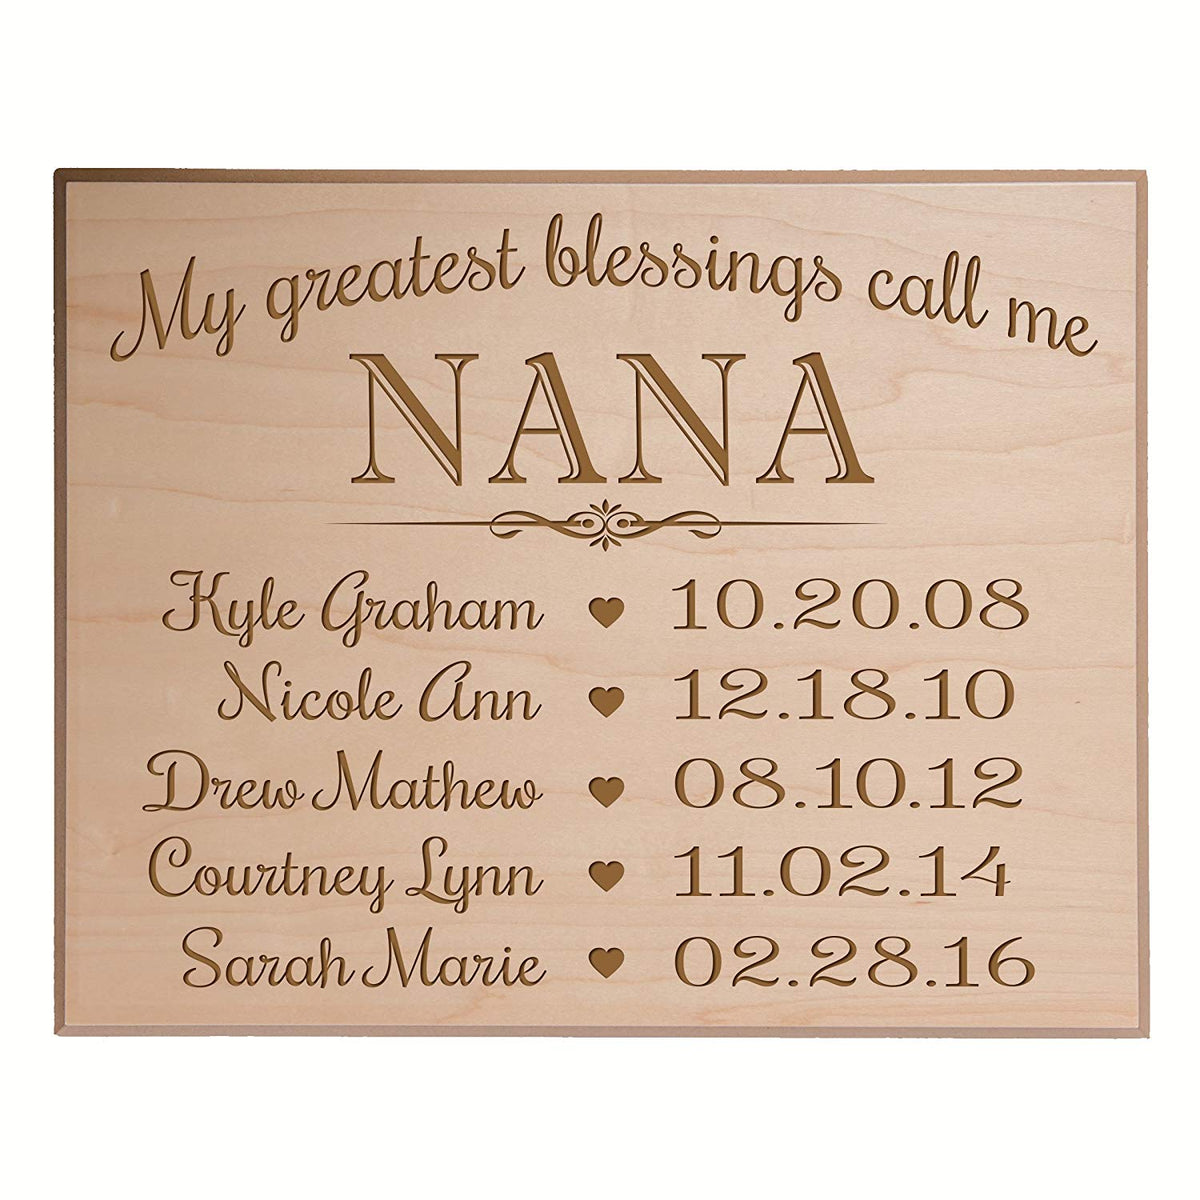 My Greatest Blessings Call Me Nana Wall Plaque (12x15, Maple Veneer wood) - LifeSong Milestones